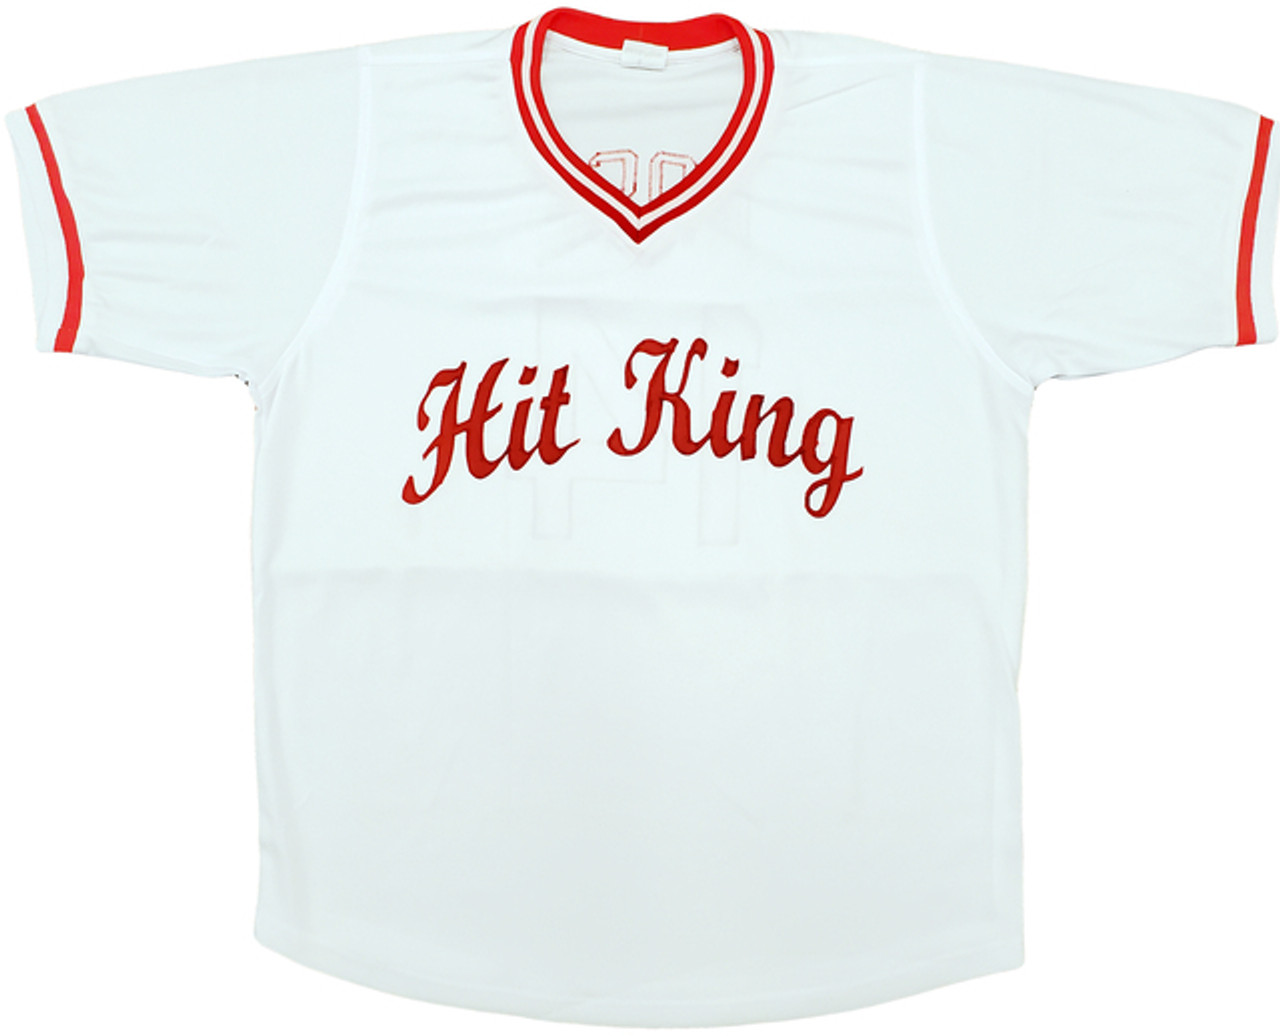 Pete Rose Autographed Cincinnati Mitchell & Ness Red Baseball Jersey (Large) - BAS